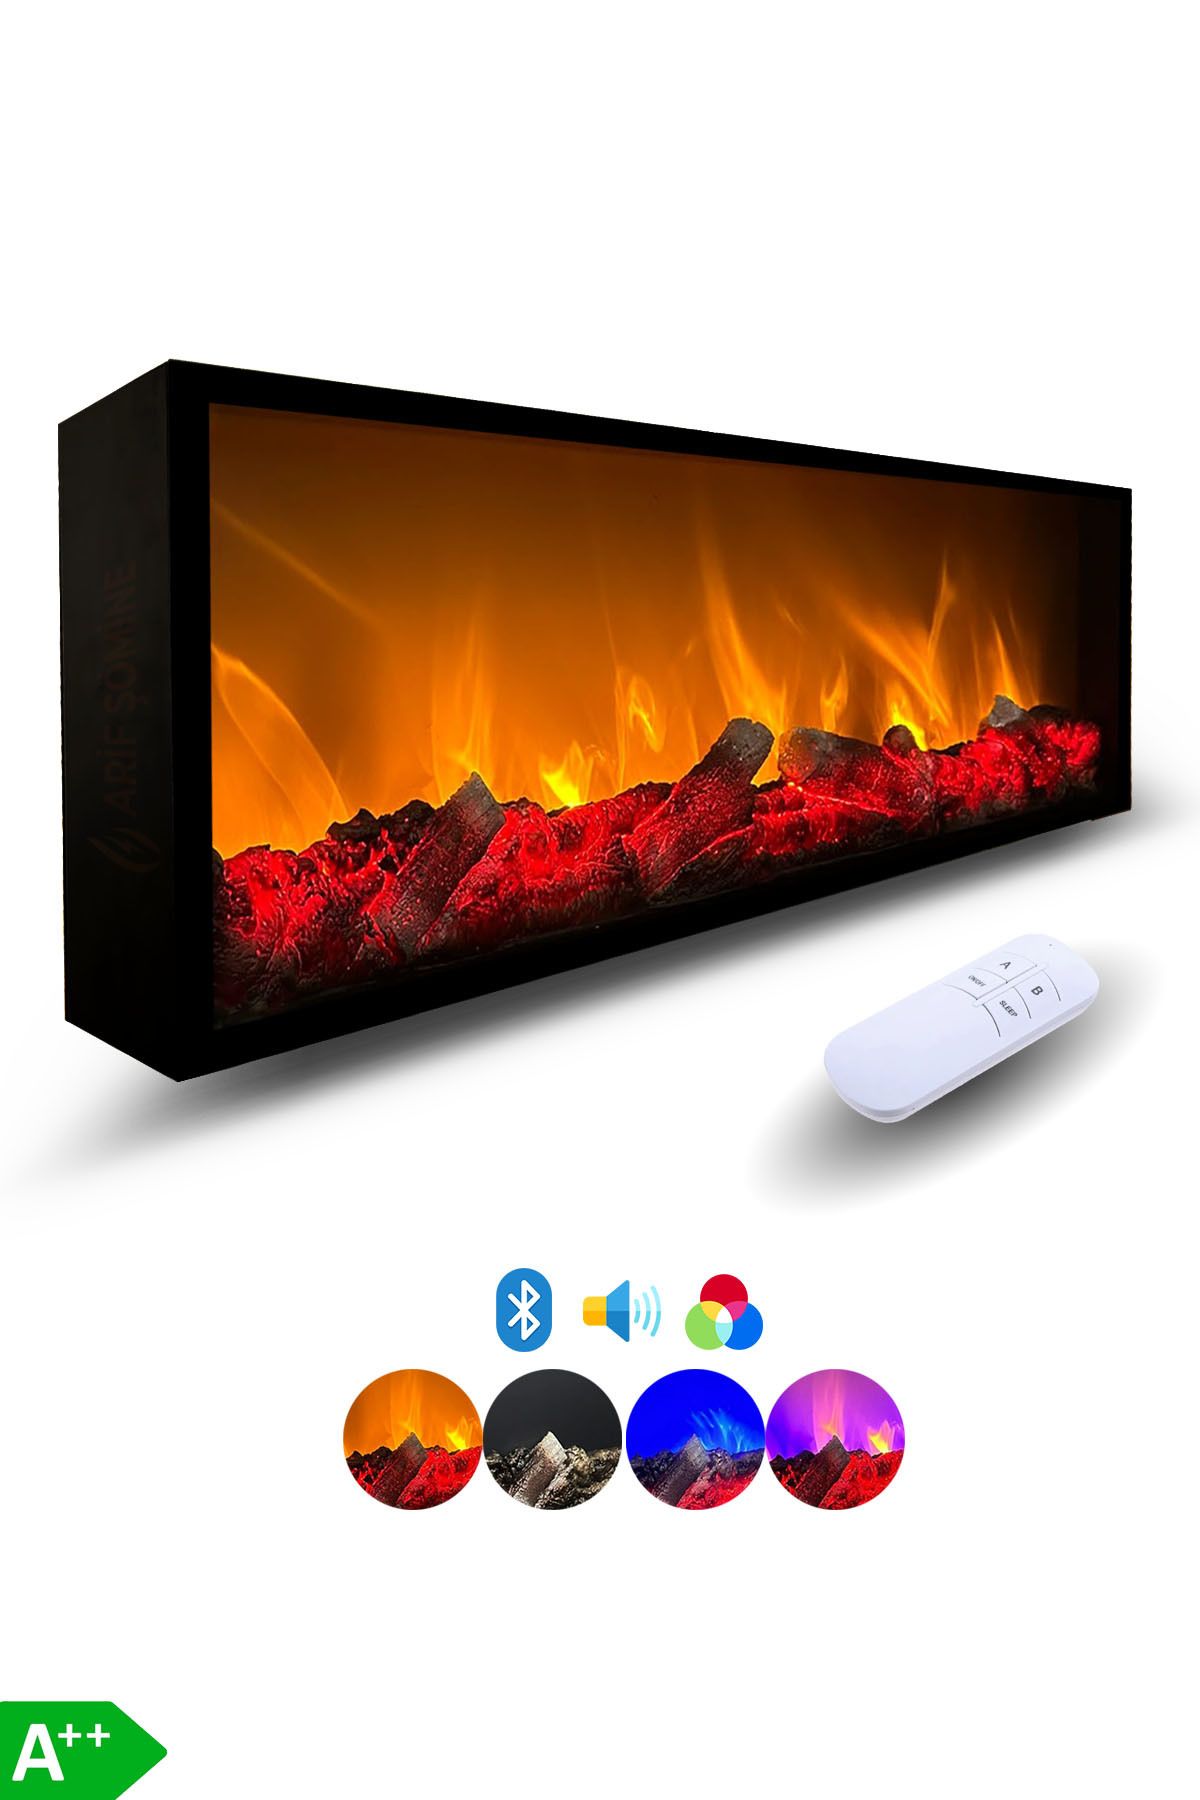 ARİF Dekoratif Elektrikli Yapay Şömine - 120x25x15 Cm - Farklı Renk Modları, Kumandalı, Bluetooth